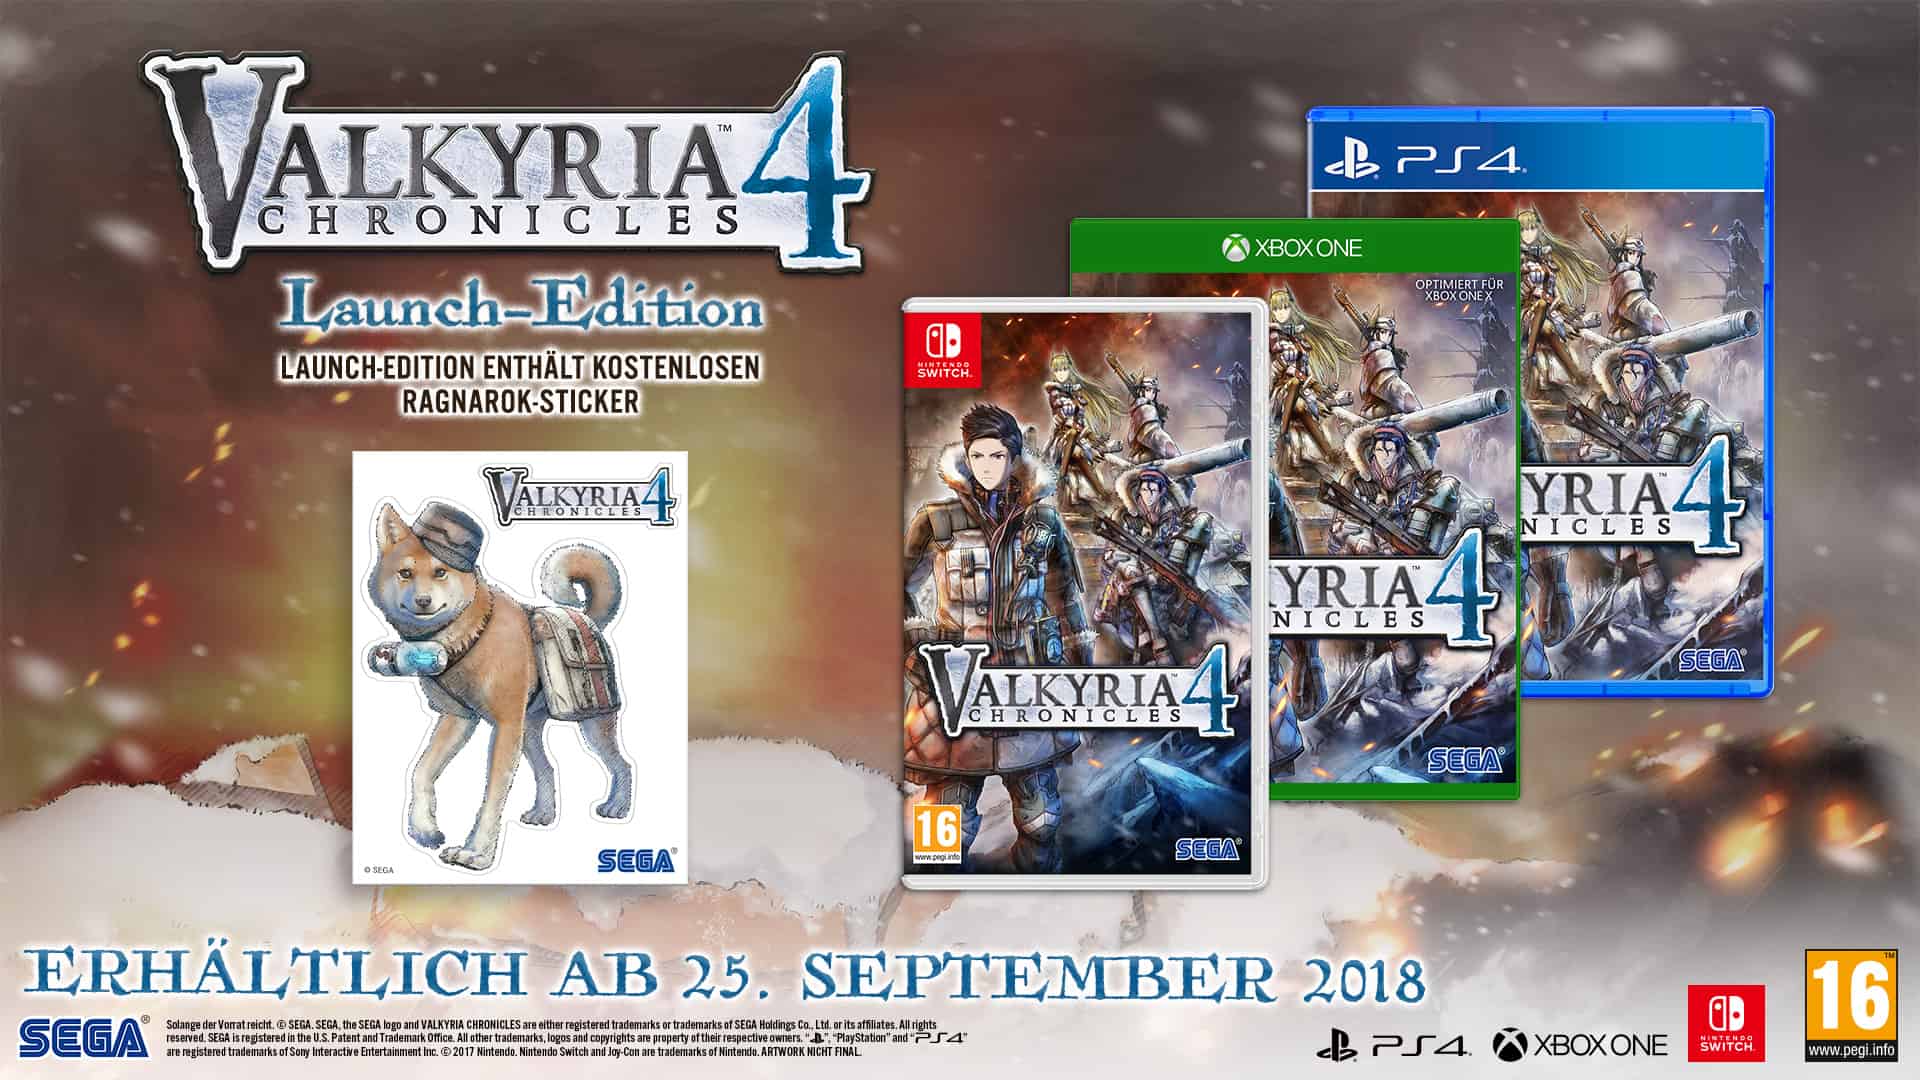 Sega - Valkyria 4 - Chronicles - Launch-Edition - Nintendo Switch - Xbox One - PlayStation 4